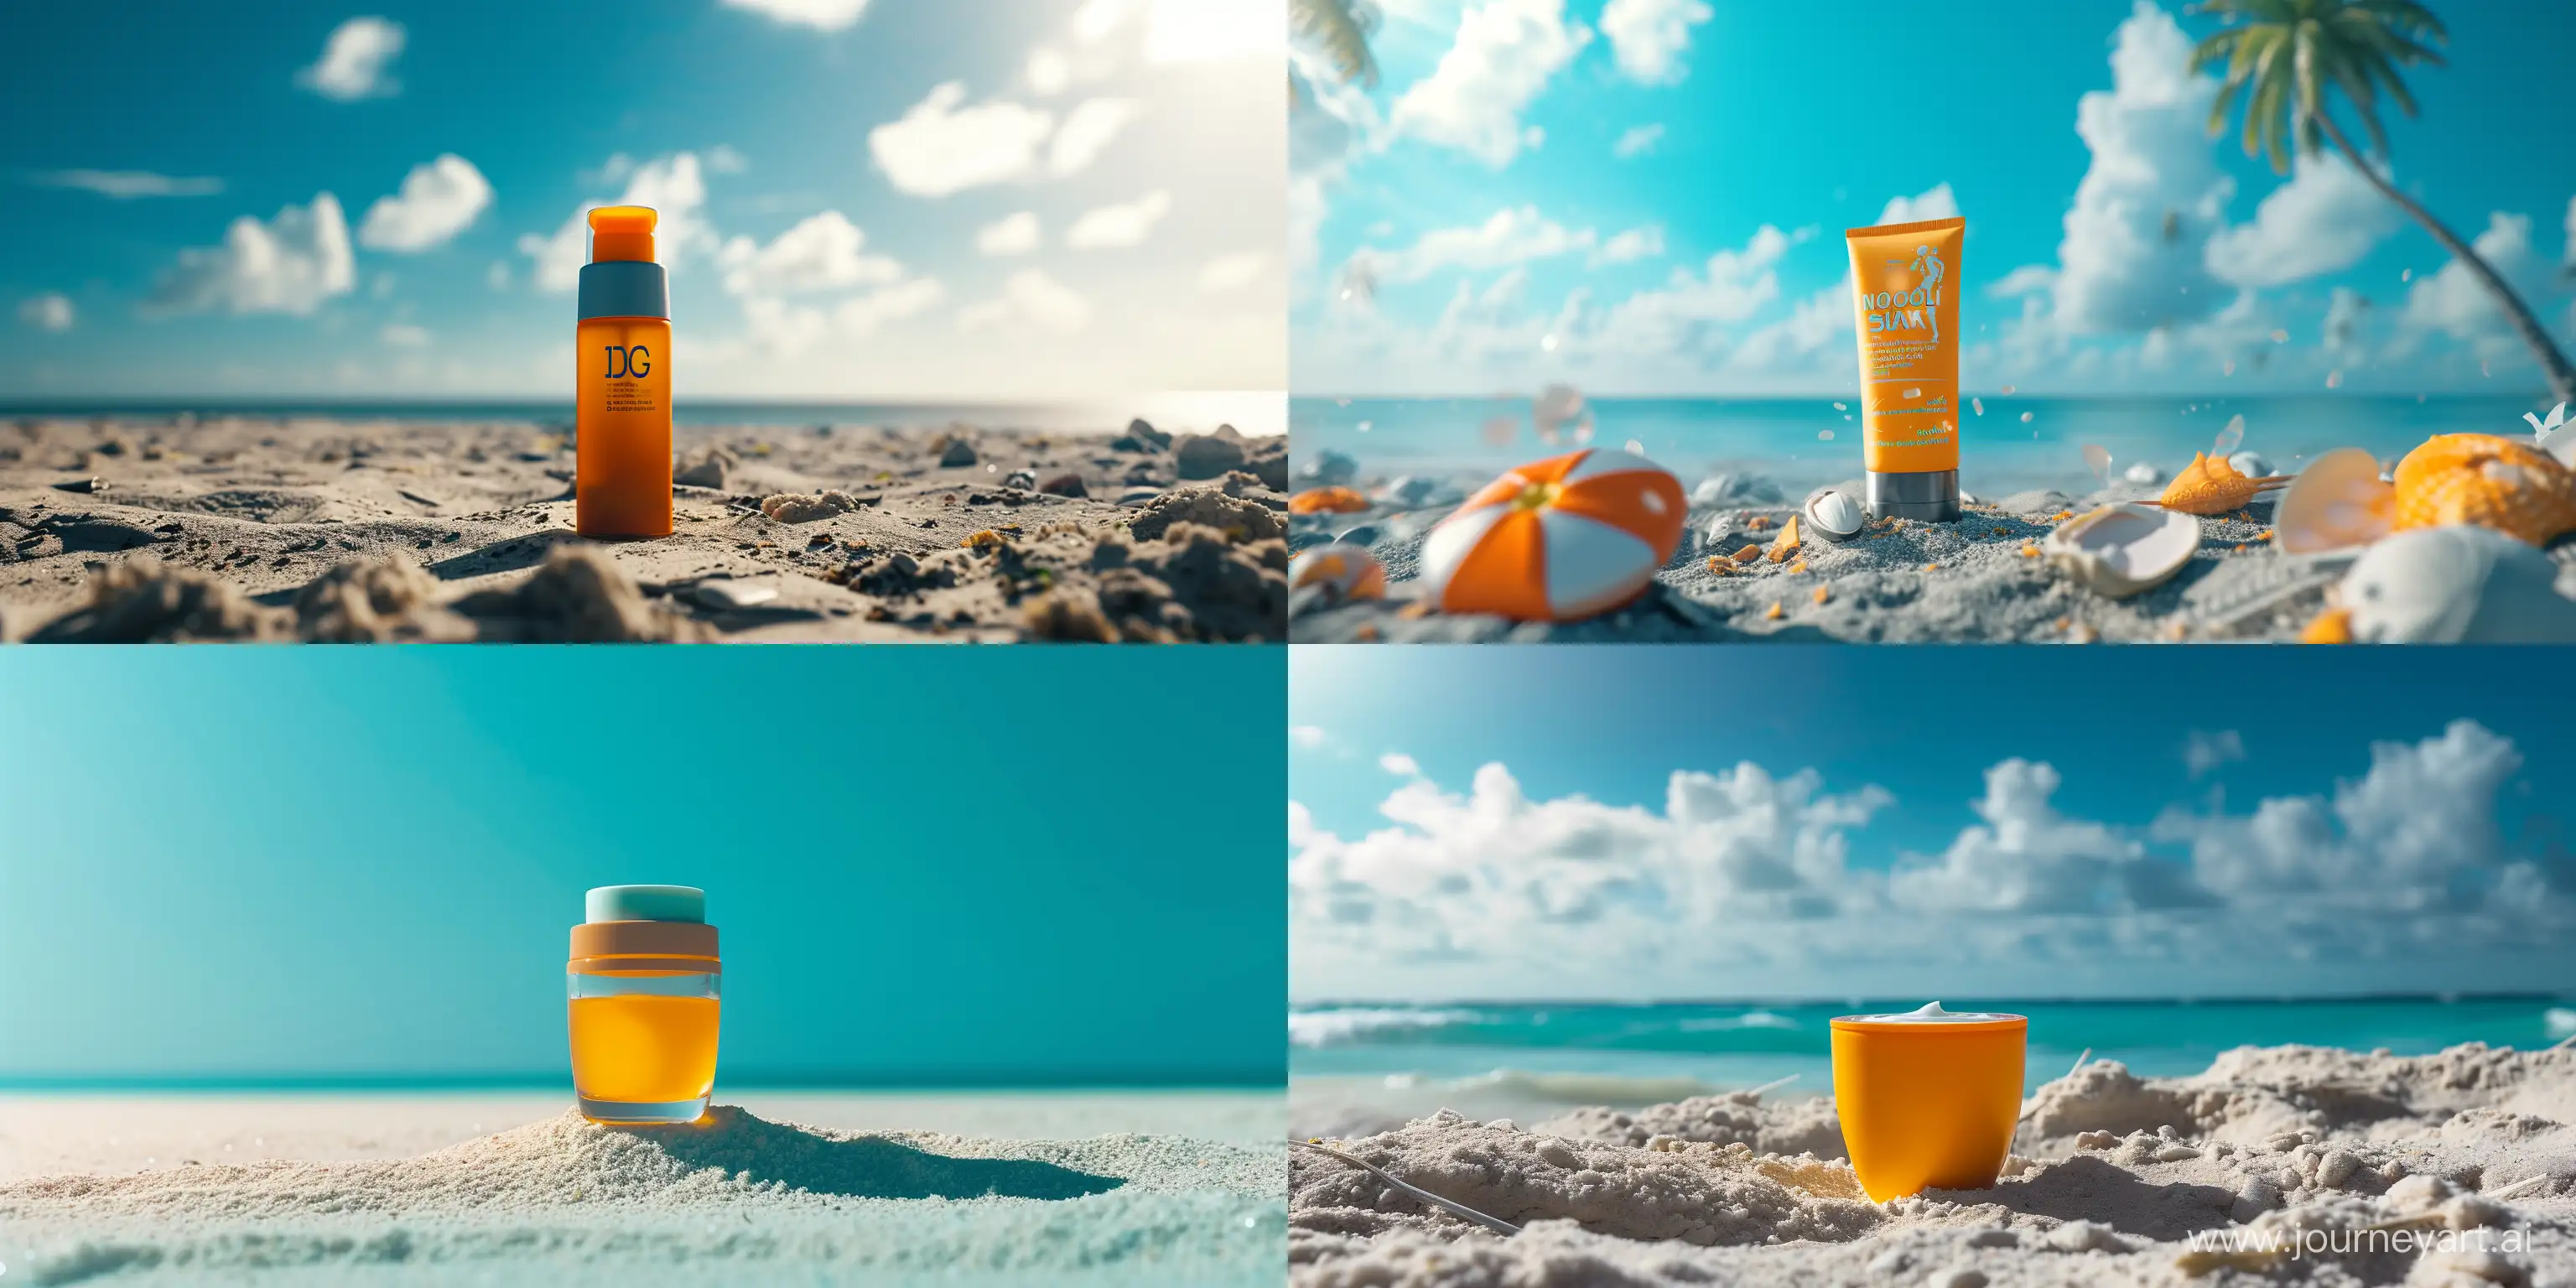 Sunscreen-Cream-Studio-Shoot-on-Beach-Under-Blue-Sky